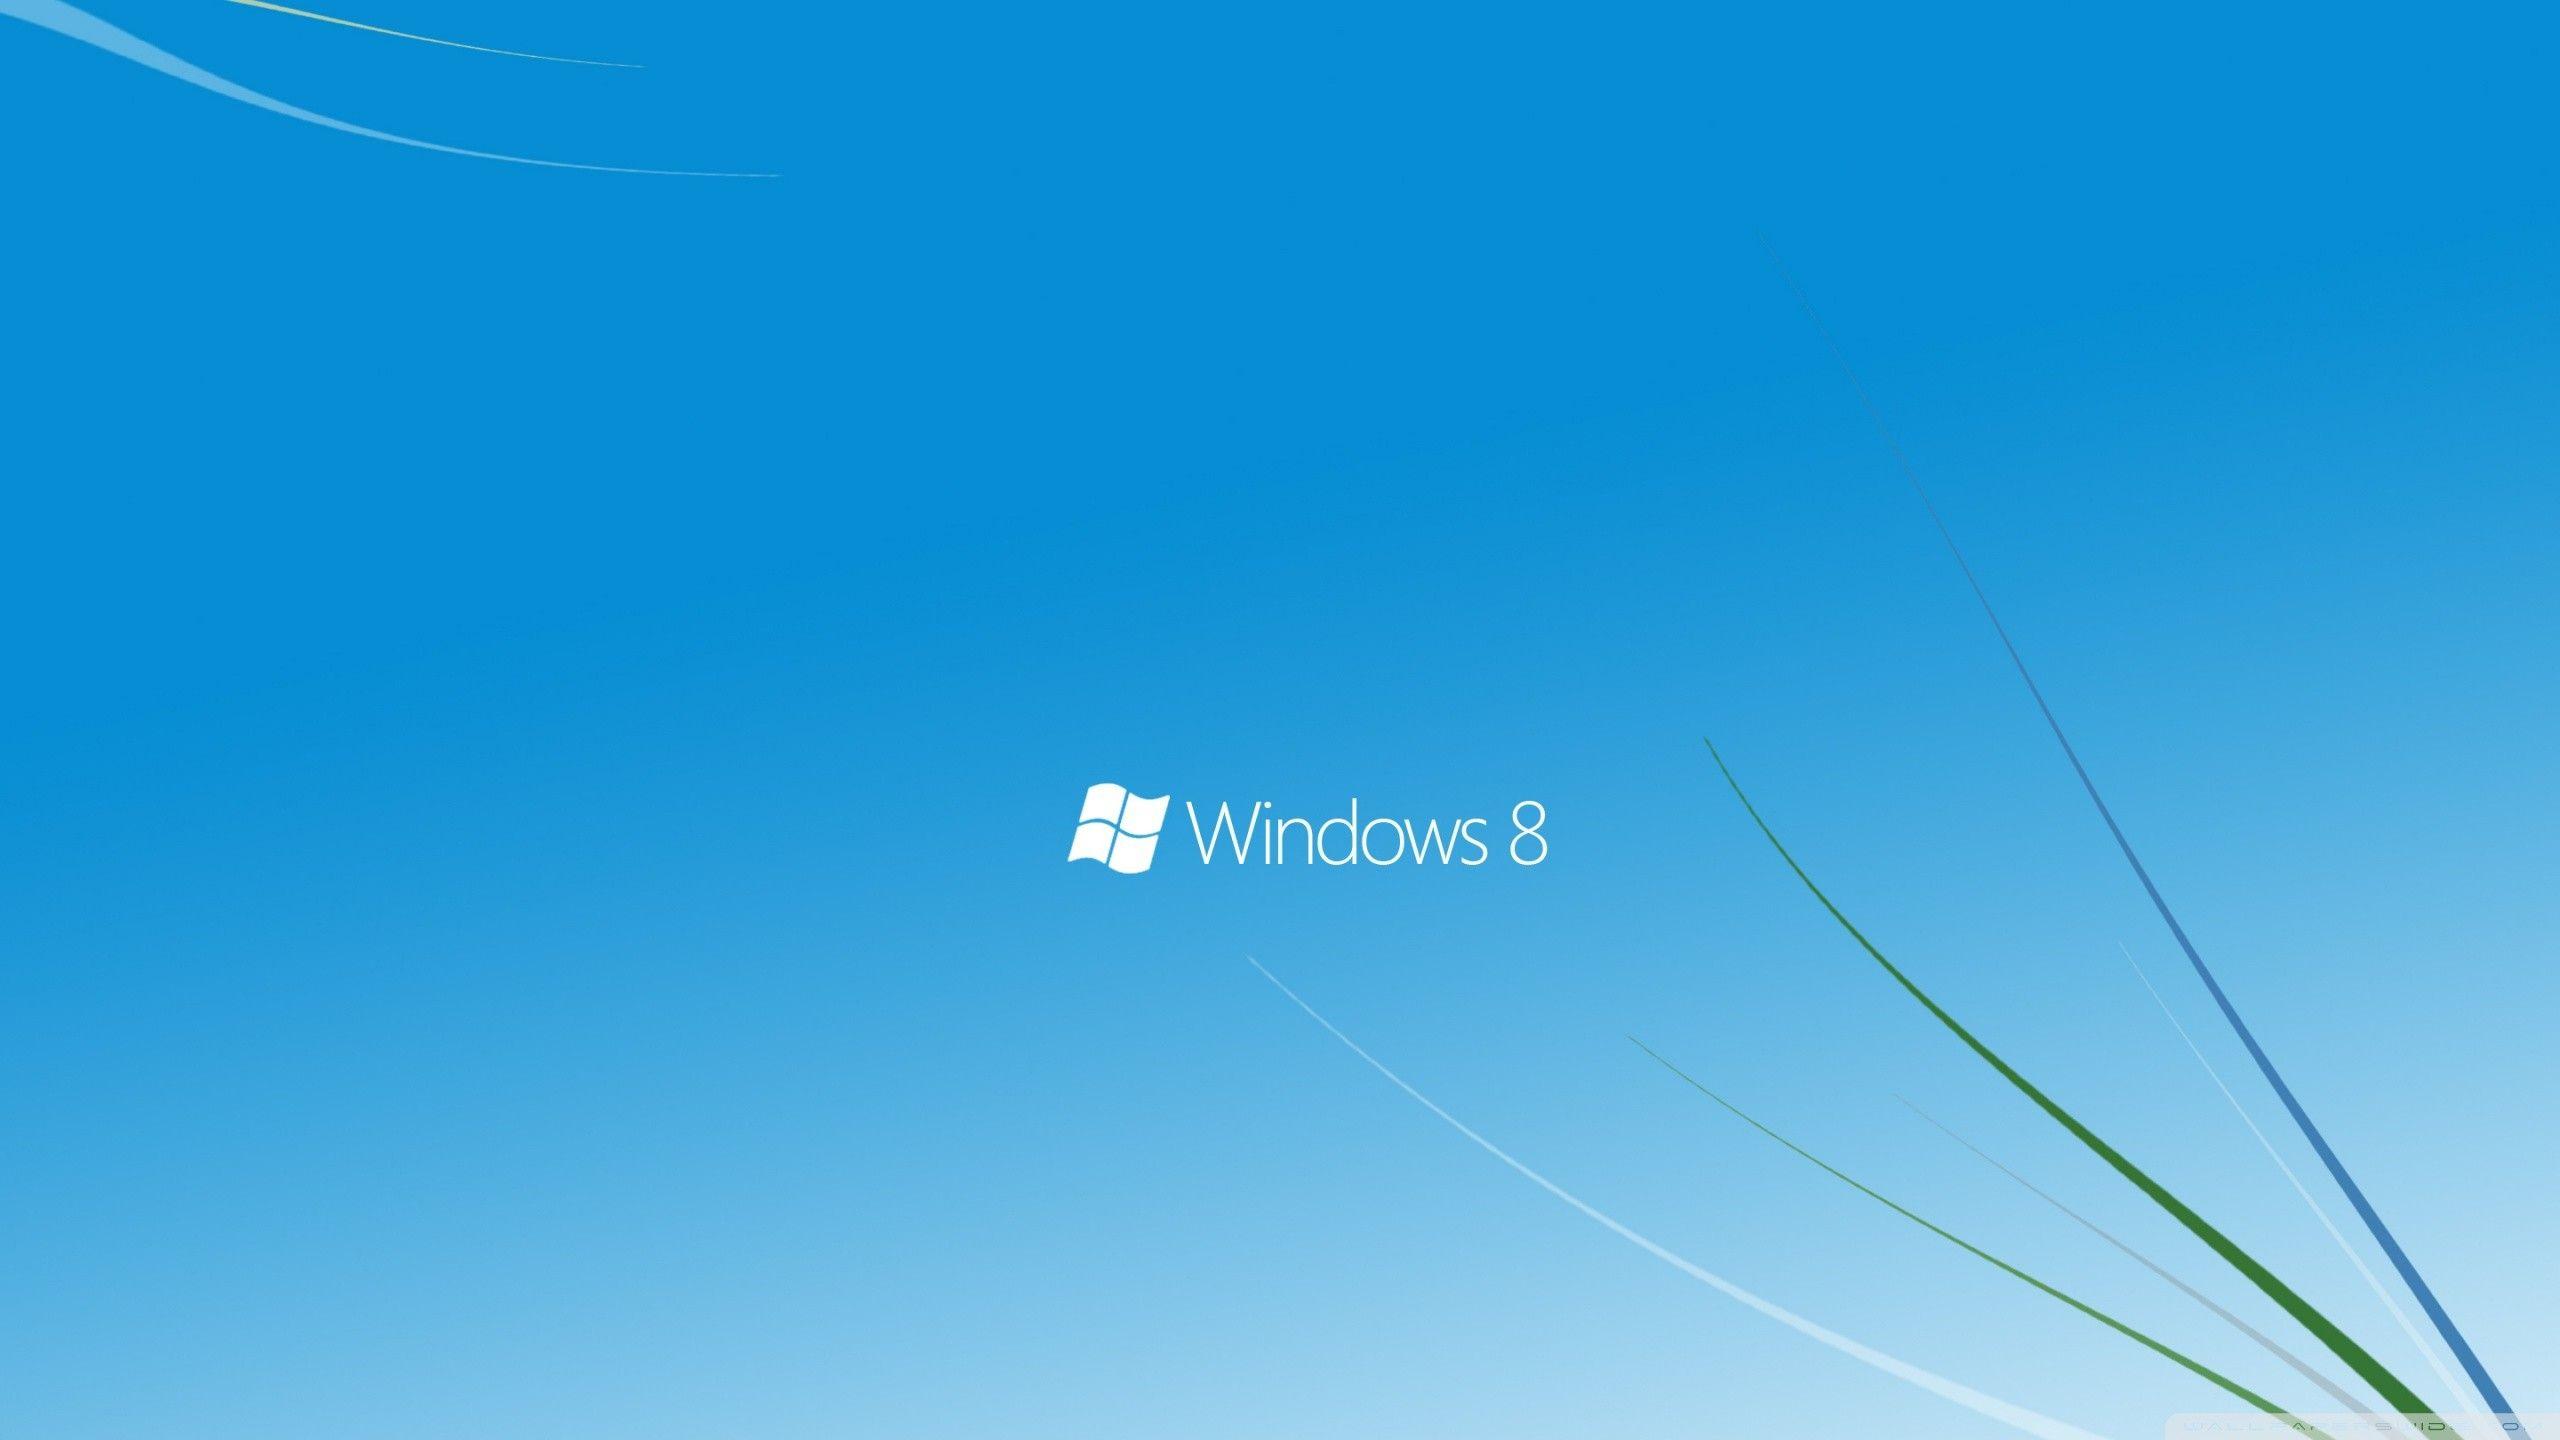 Windows 8 Official Logo - Windows 8 Official Wallpaper ·①